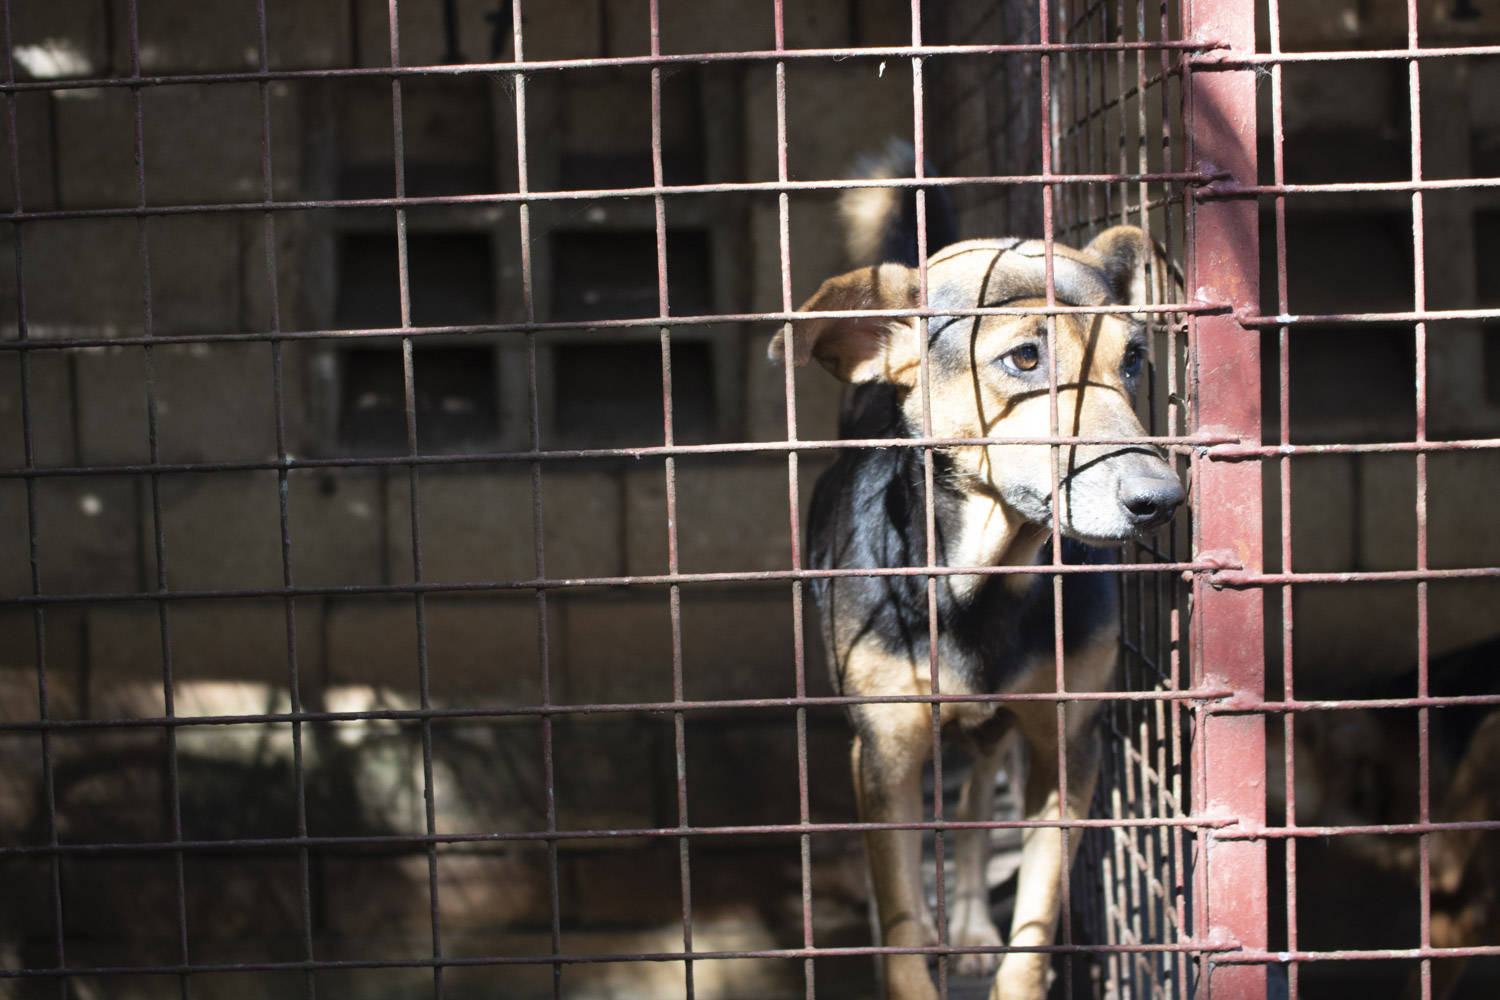 California animal shelters are at maximum capacity